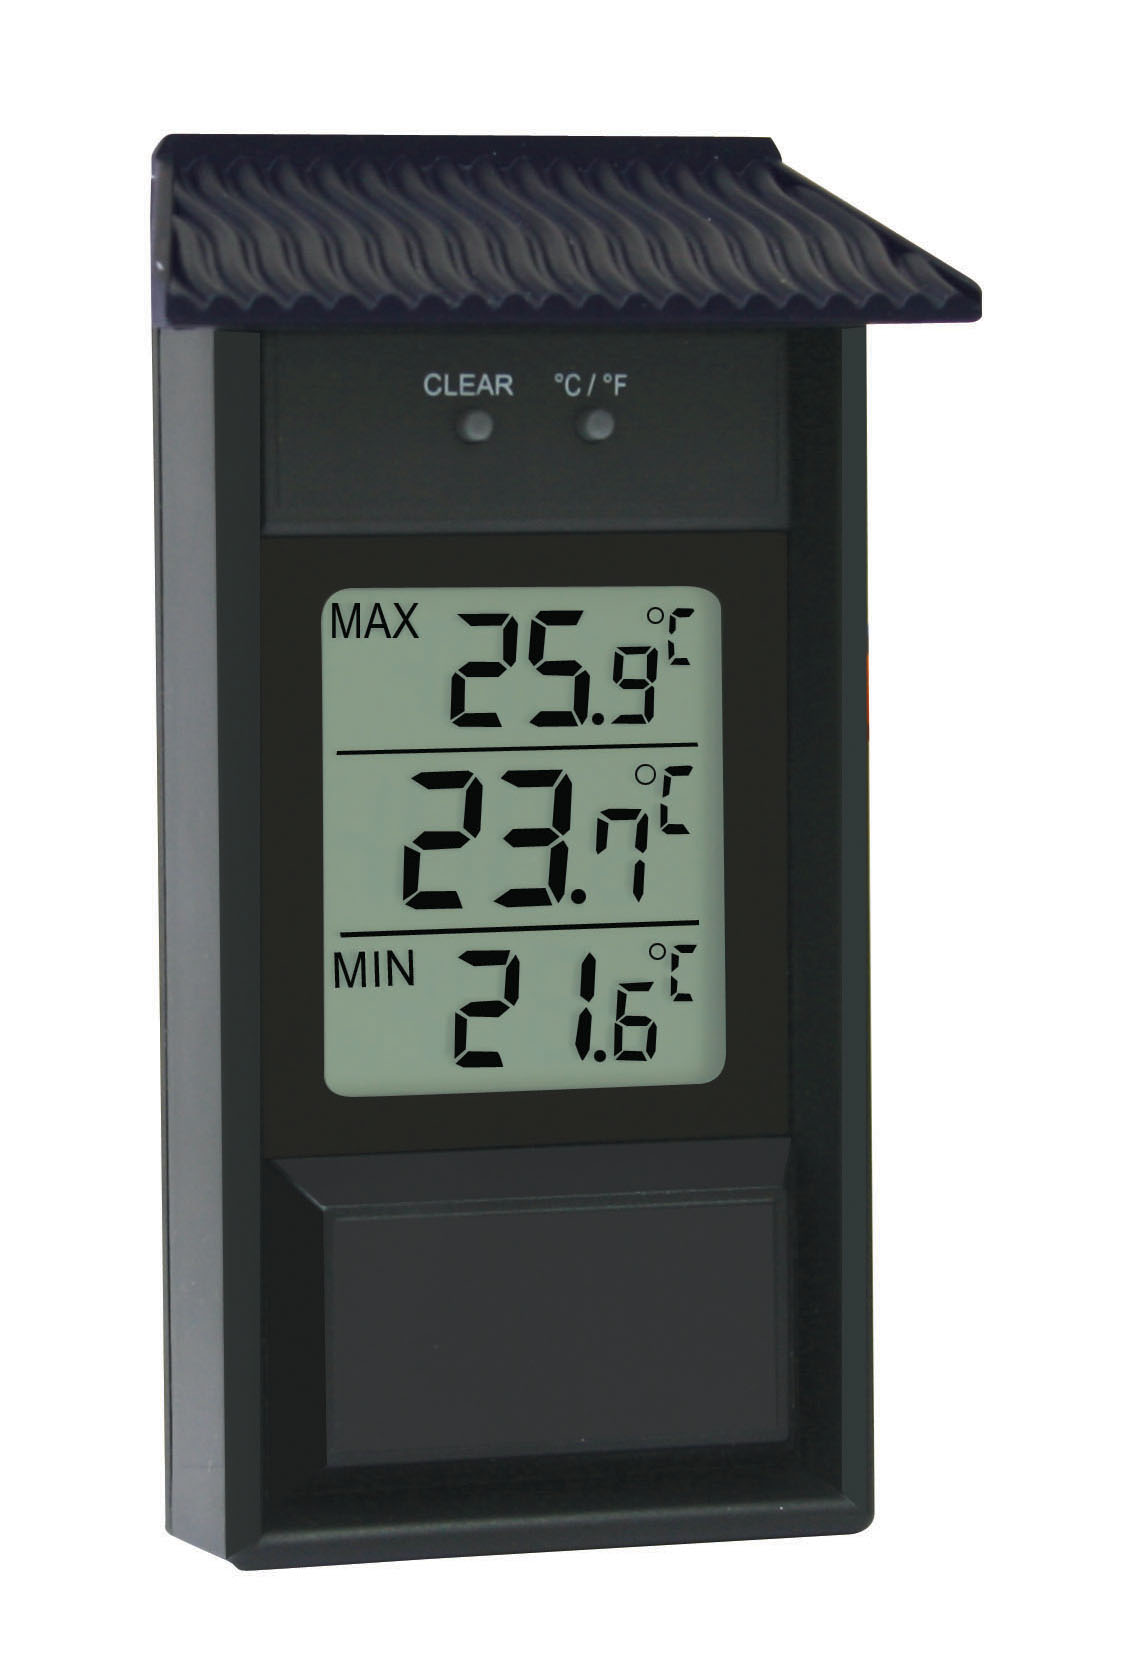 Thermomètre digital étanche - 50/ +200°C blanc - Sobema Distributio